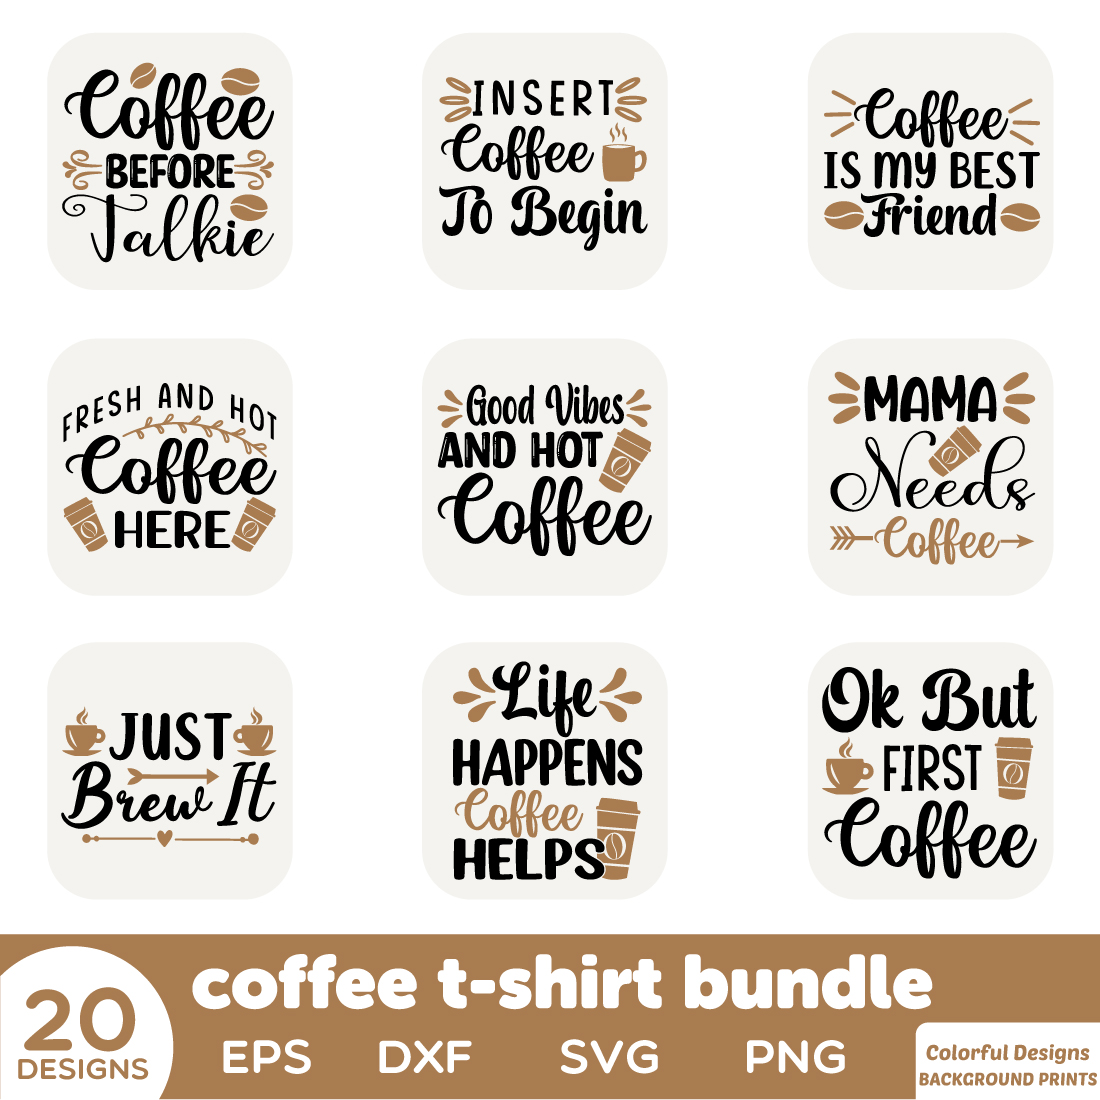 Coffee t-shirt bundle preview image.